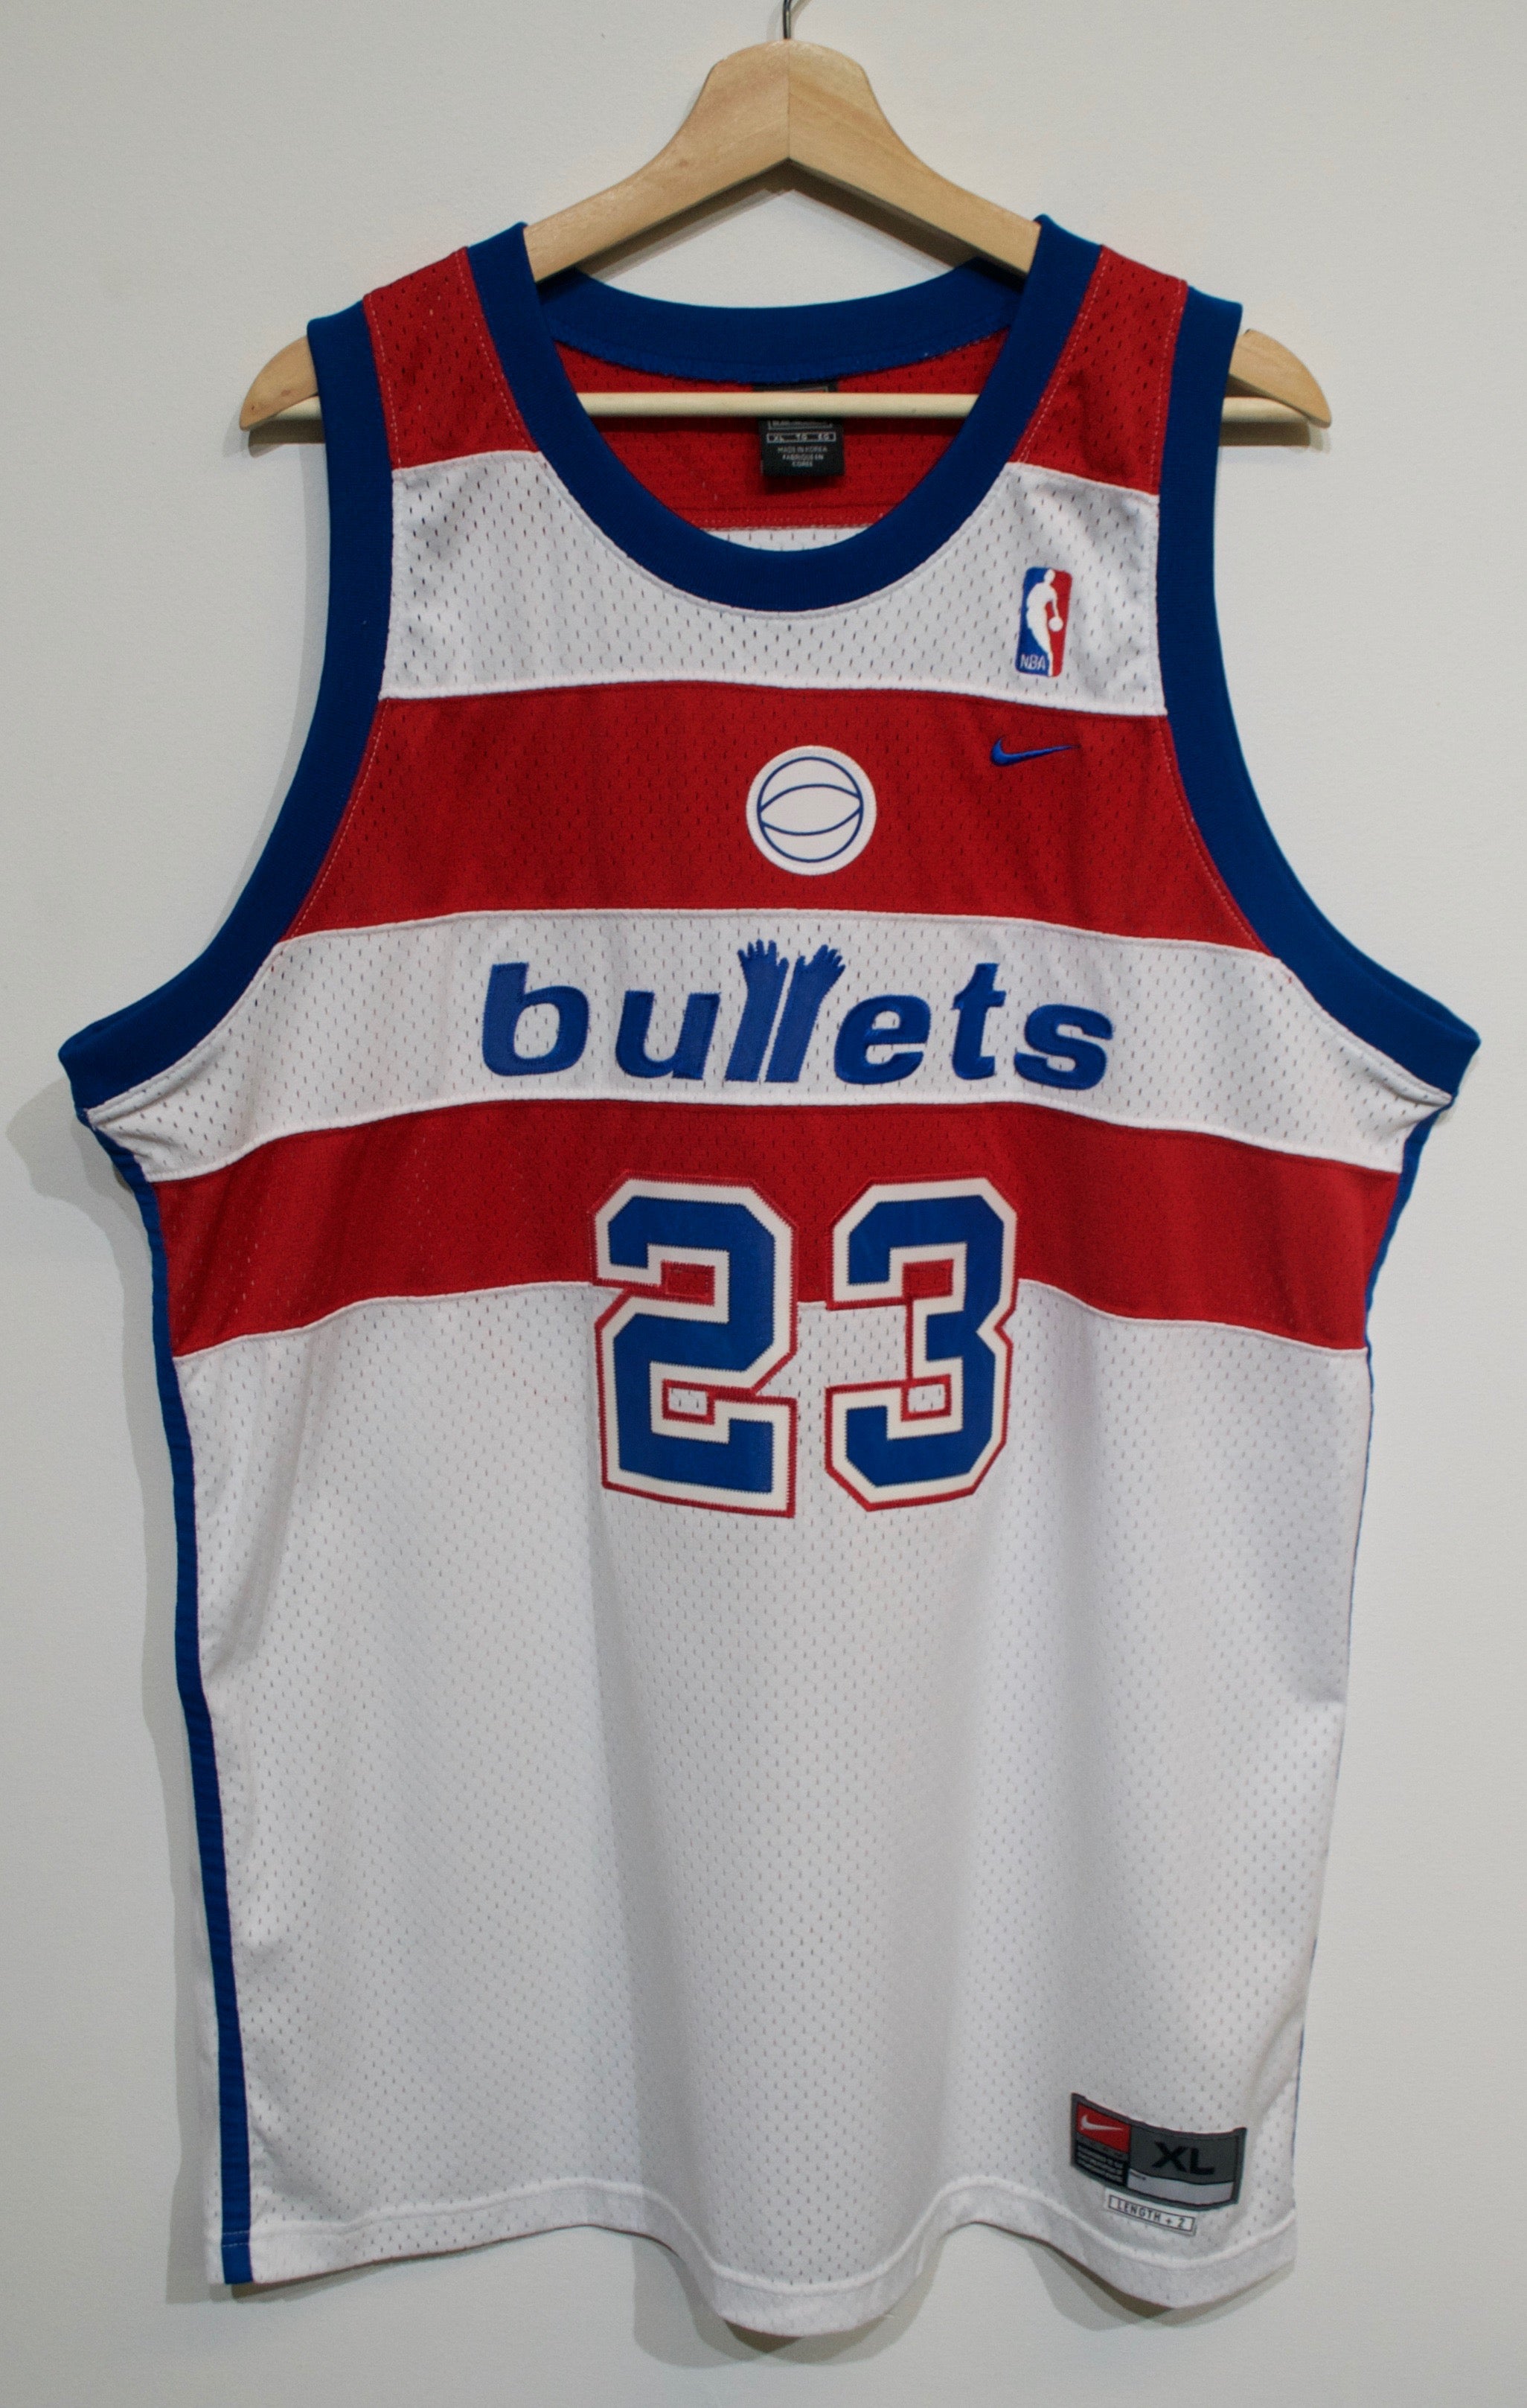 Michael Jordan Chicago Bulls/Washington Bullets Jersey